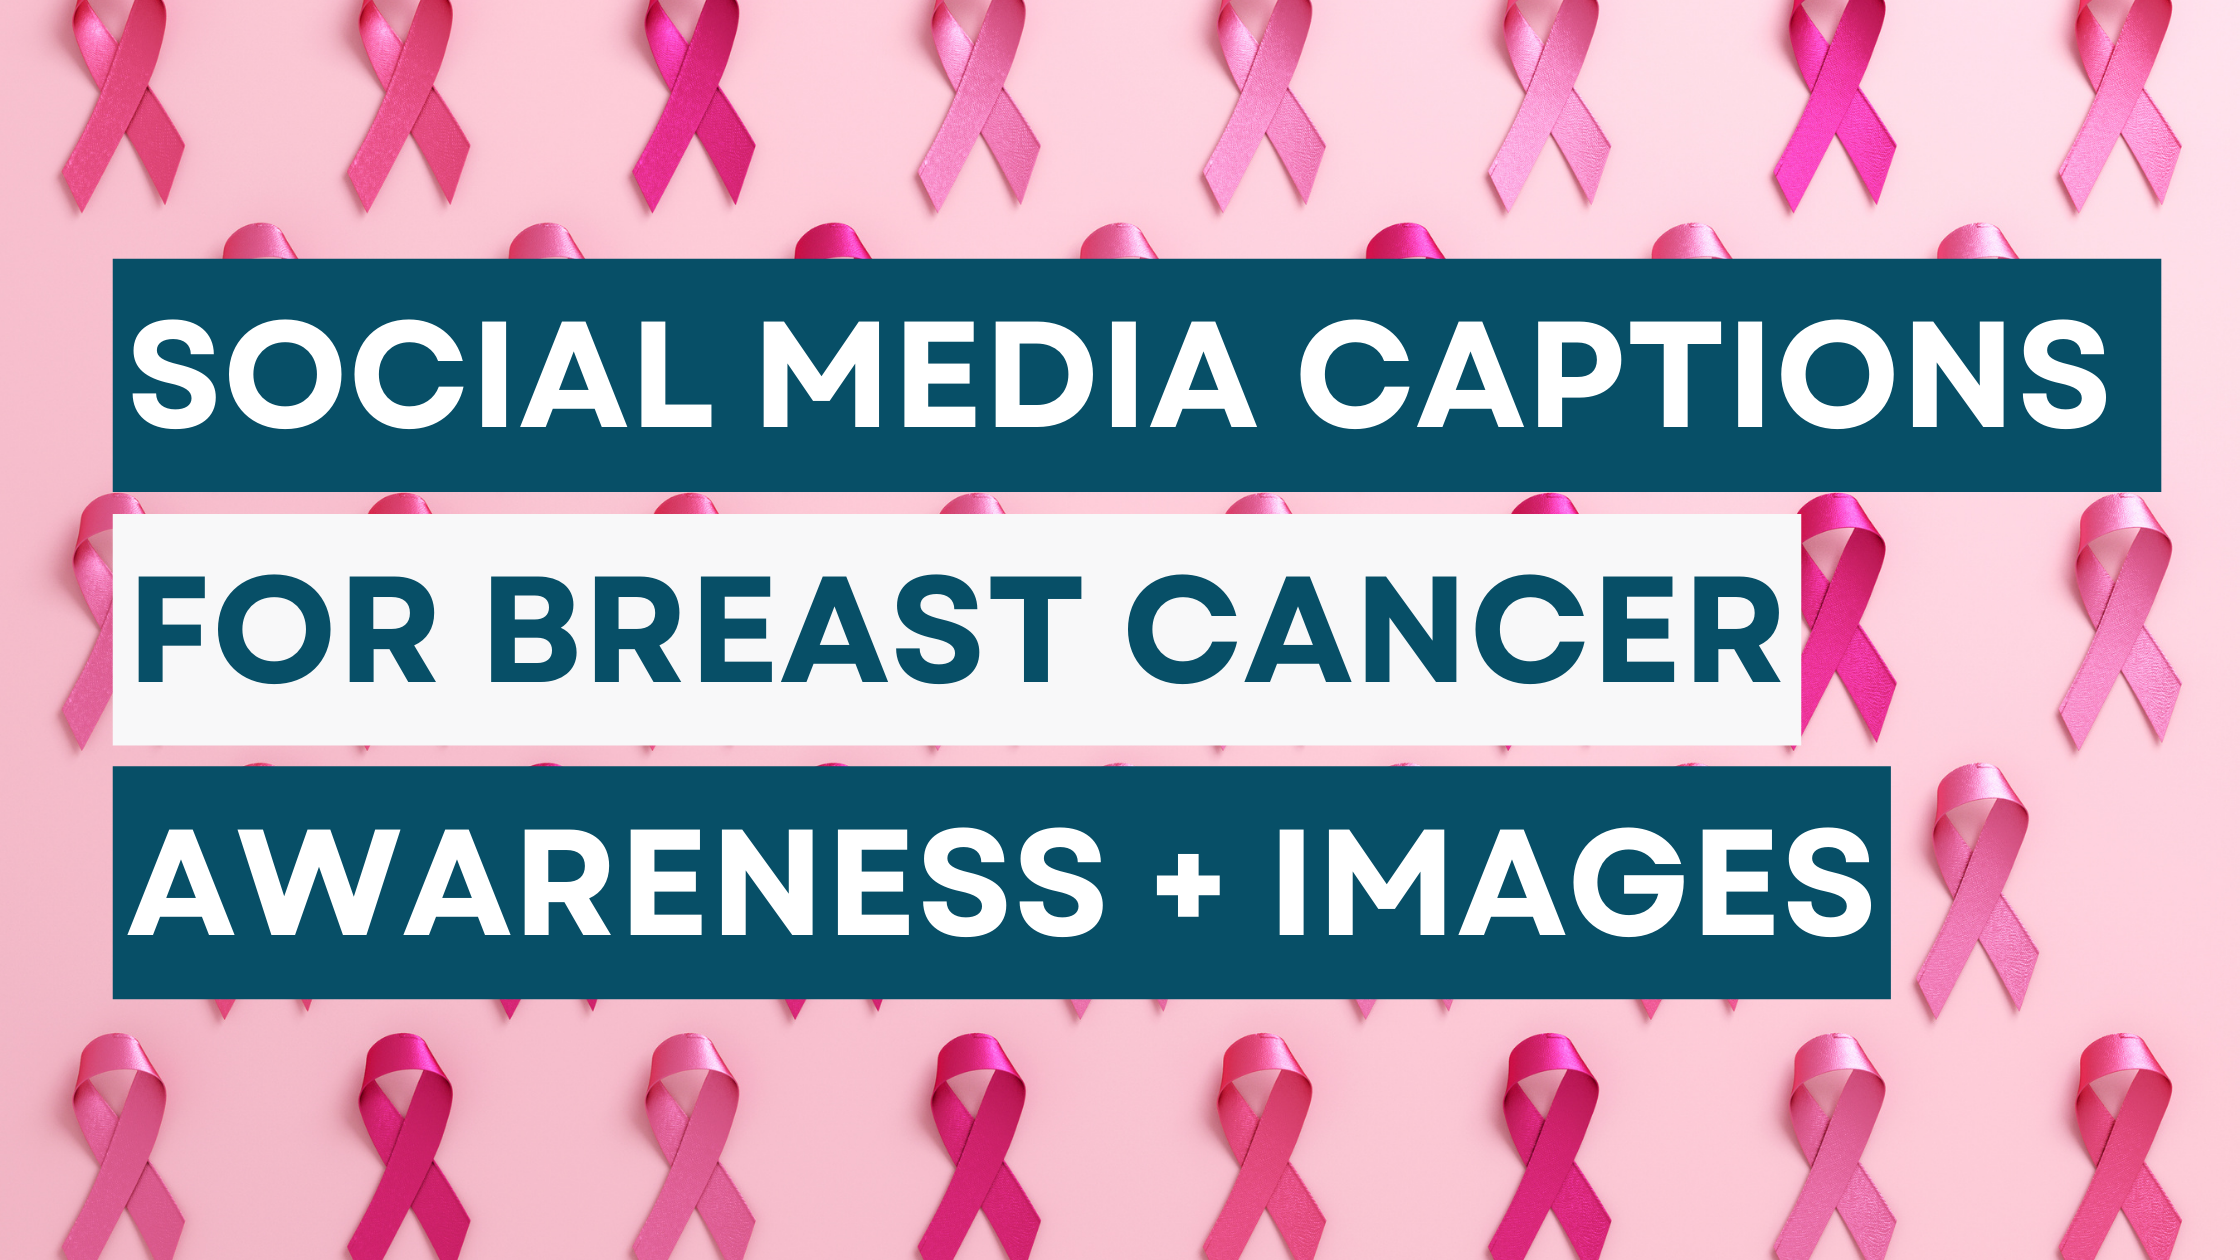 Social Media Captions for Breast Cancer Awareness